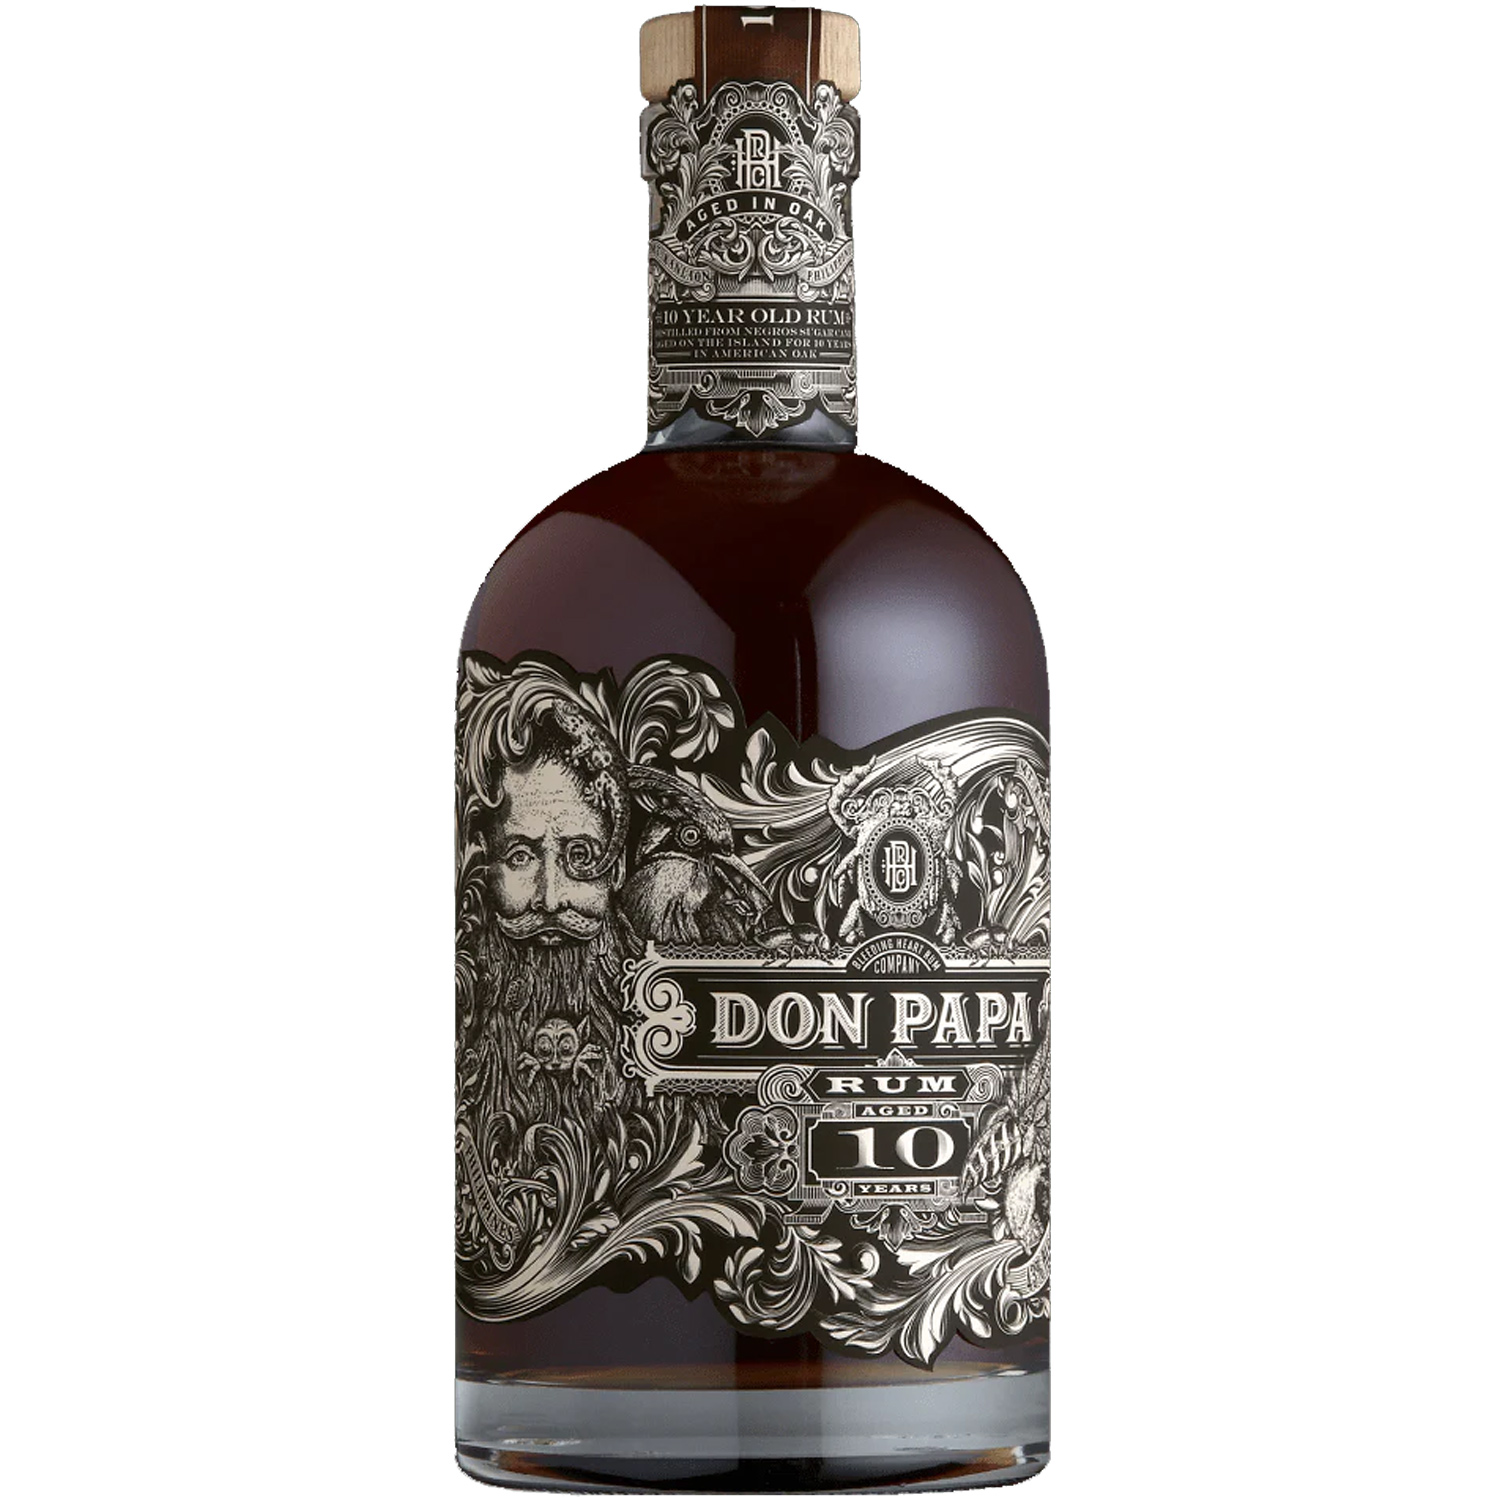 Don Papa Rum aged 10 years